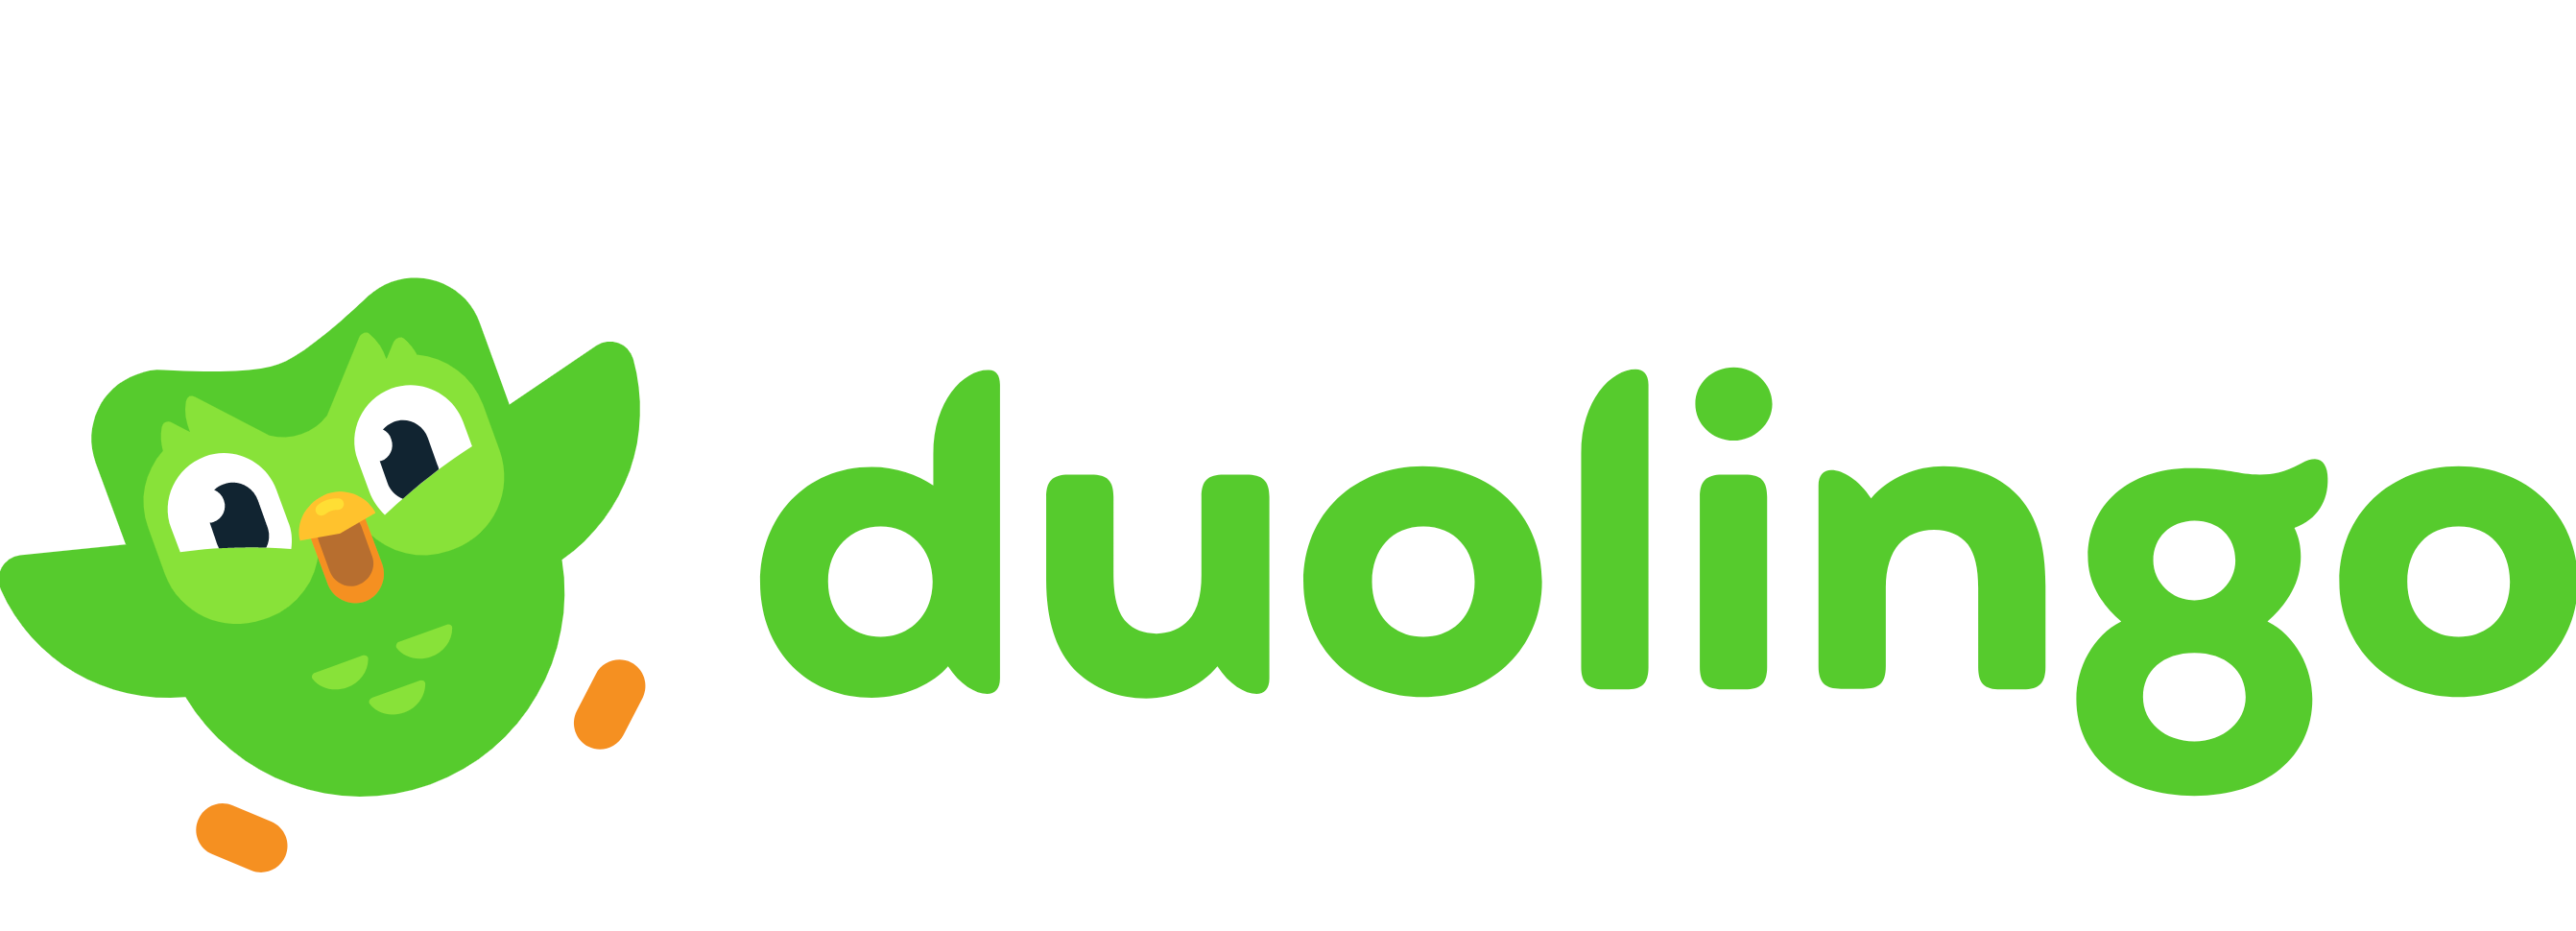 Duolingo_mascot_logo.png